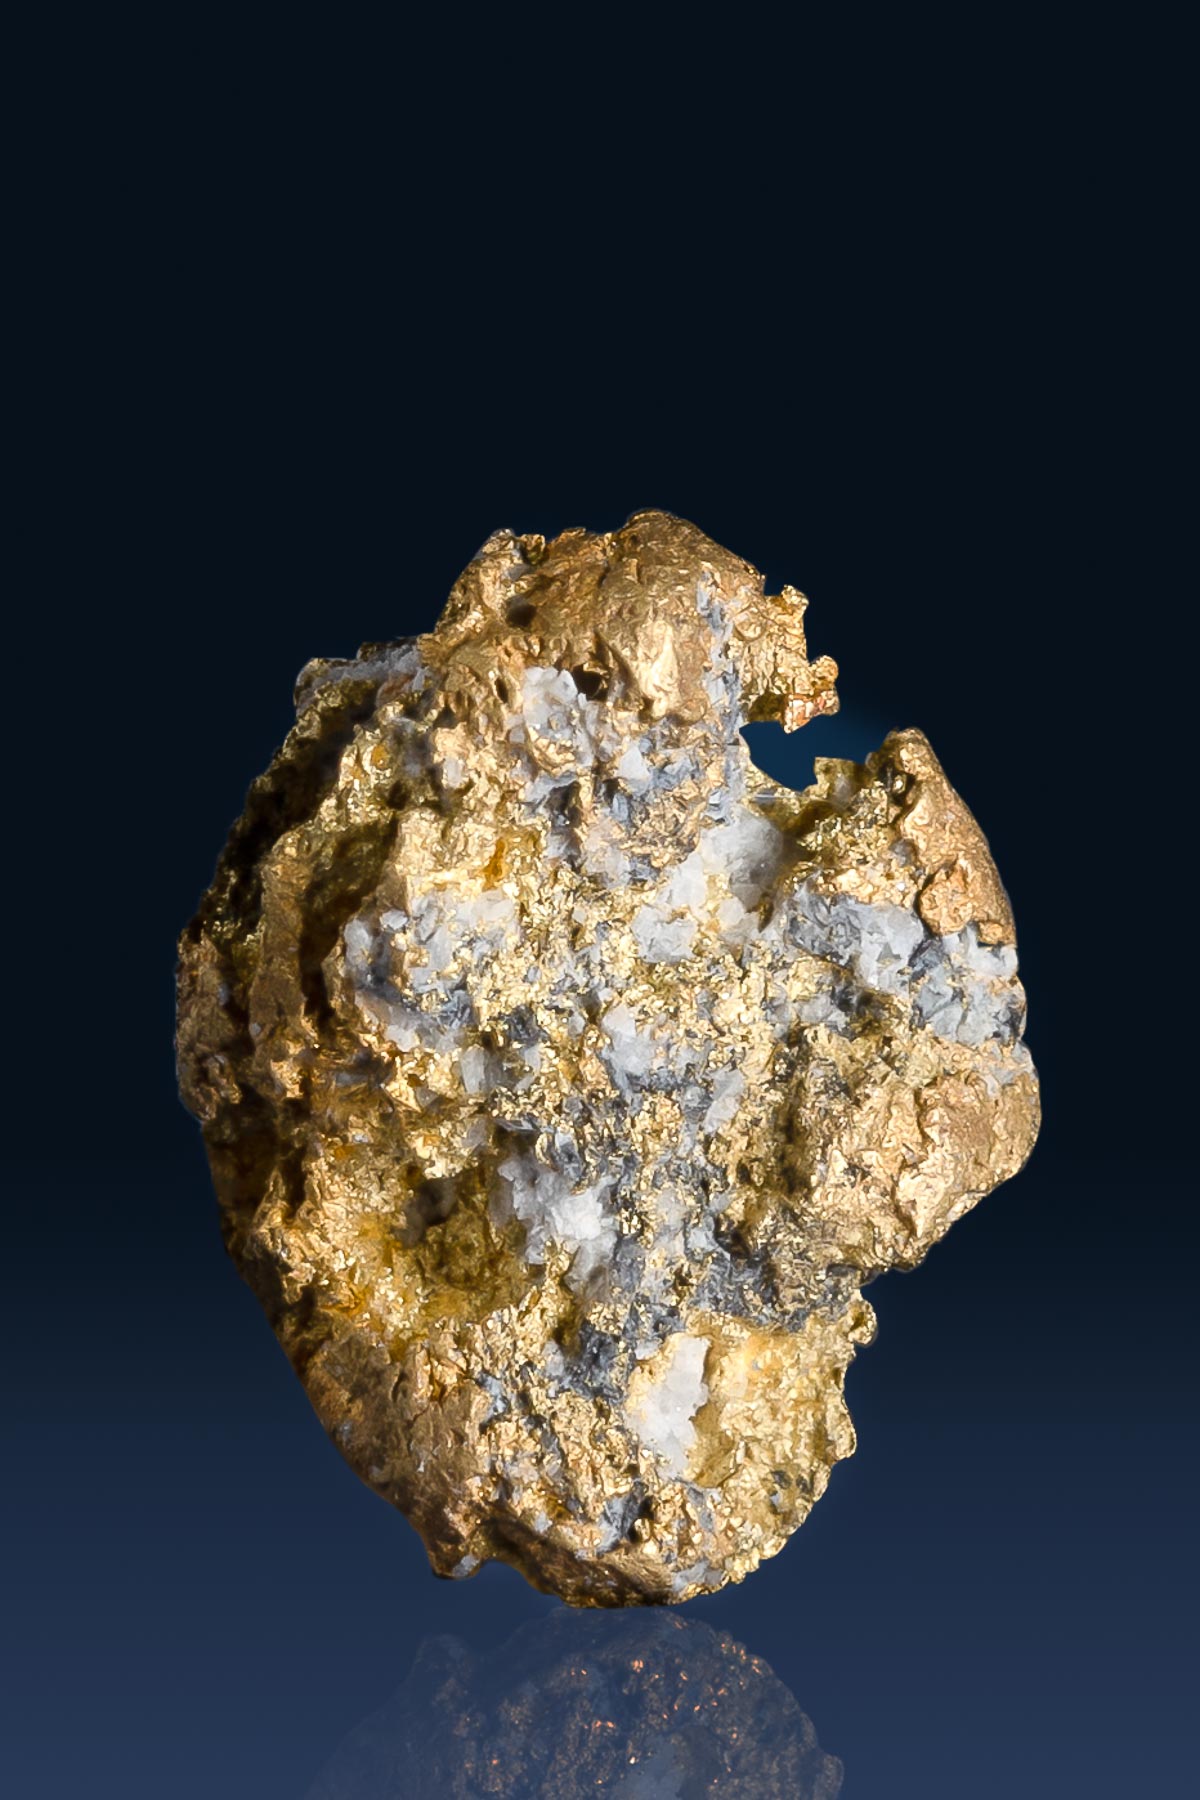 Round Natural California Gold Nugget with Quartz - 2.35 grams